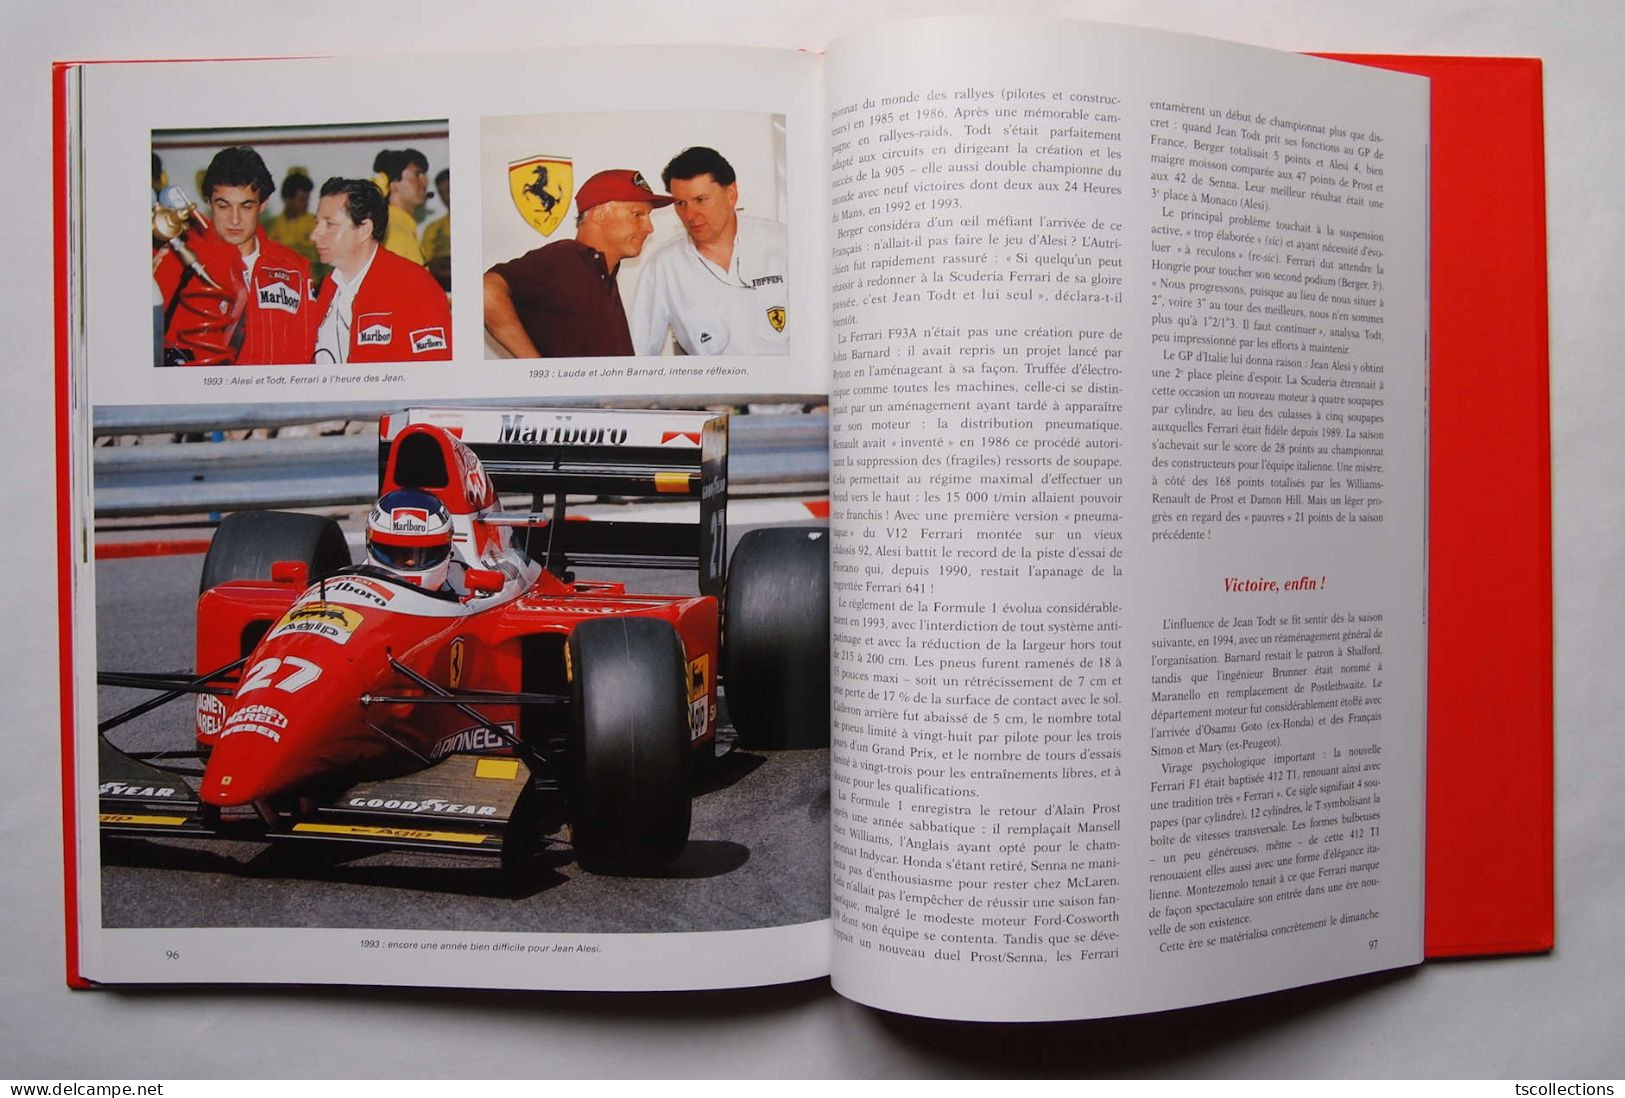 Ferrari Formule record